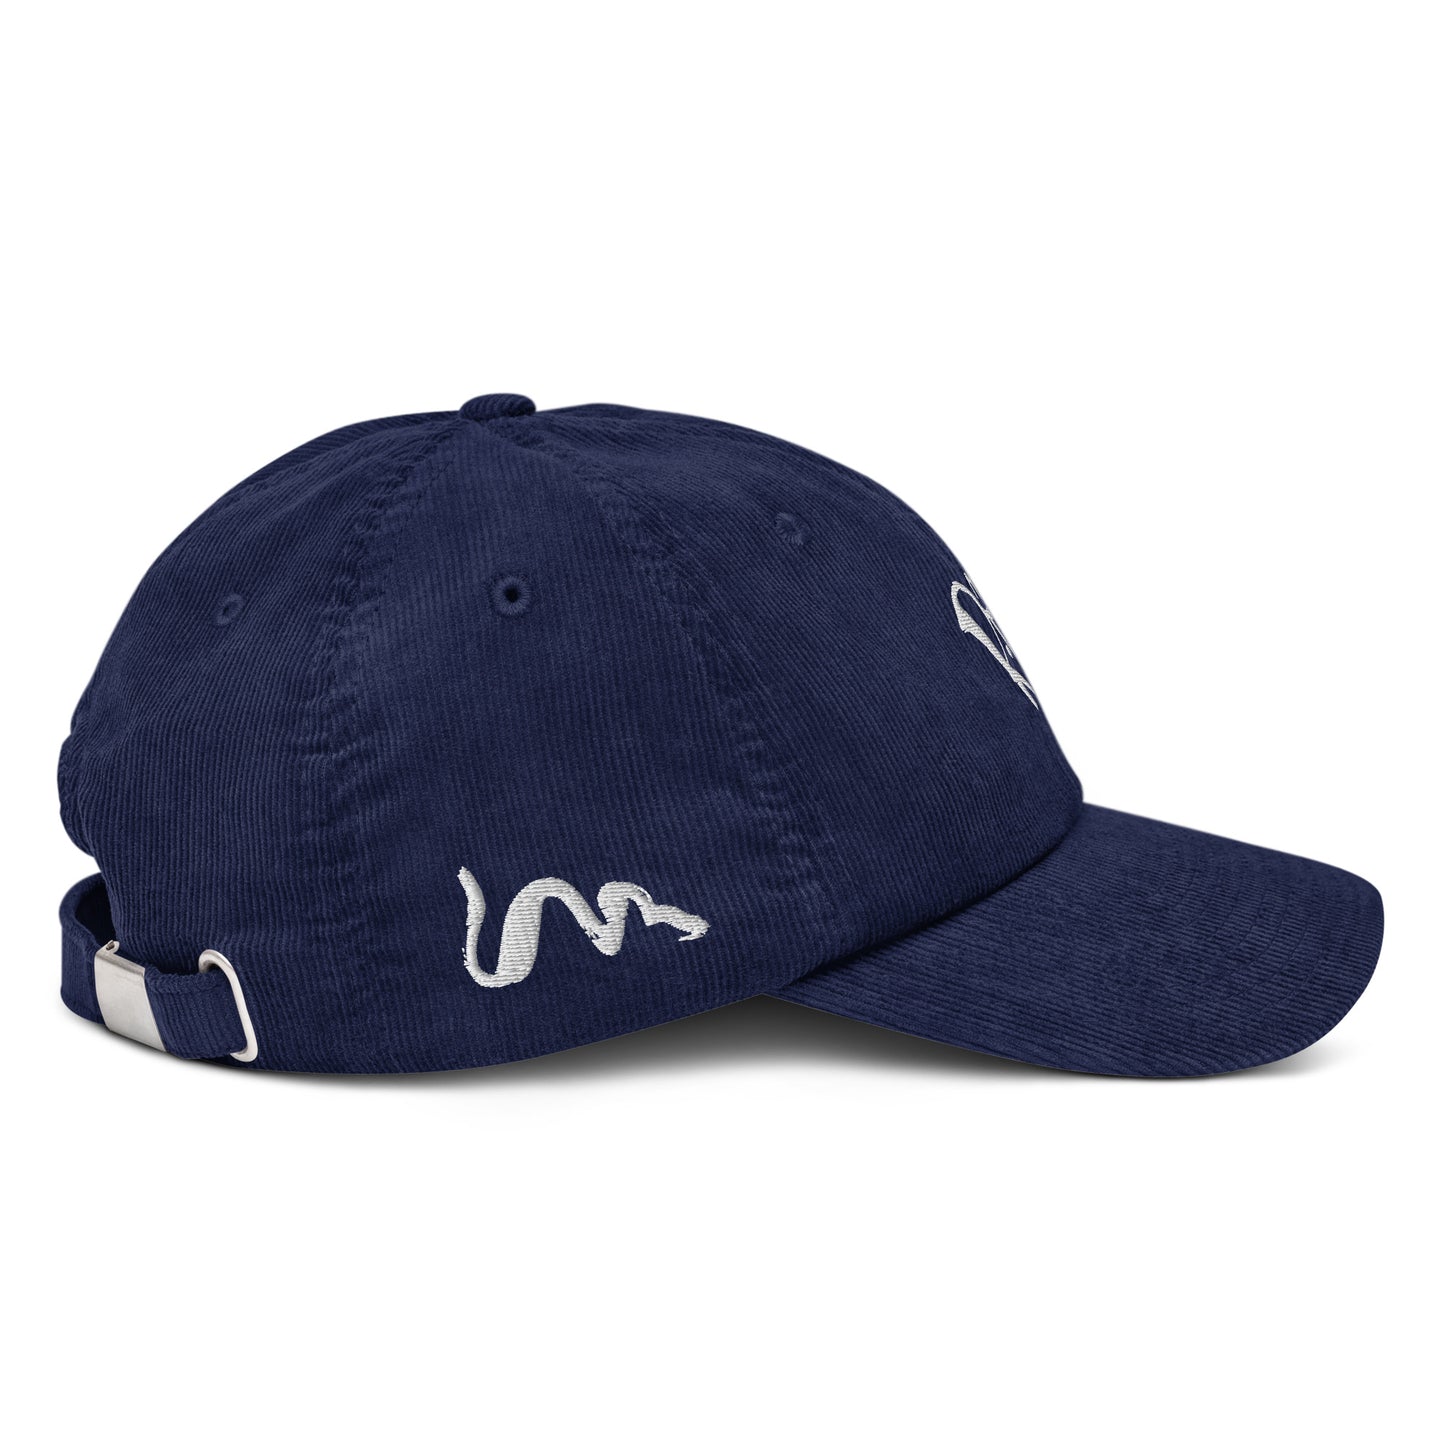 REHH - Corduroy hat (Navy)